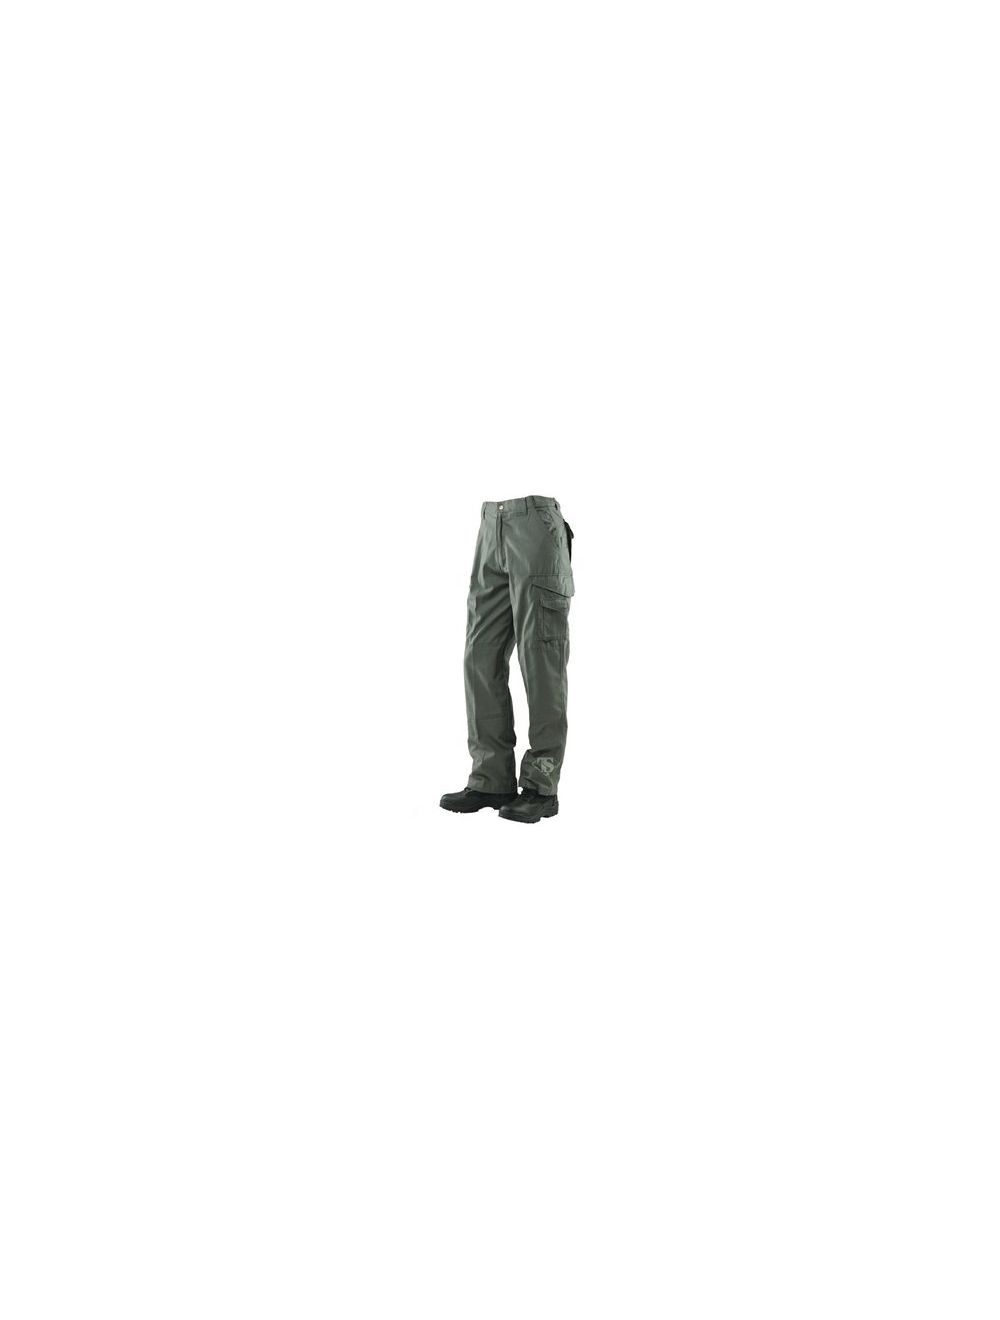 24-7 Original Tactical Pants - 6.5oz - OD Green